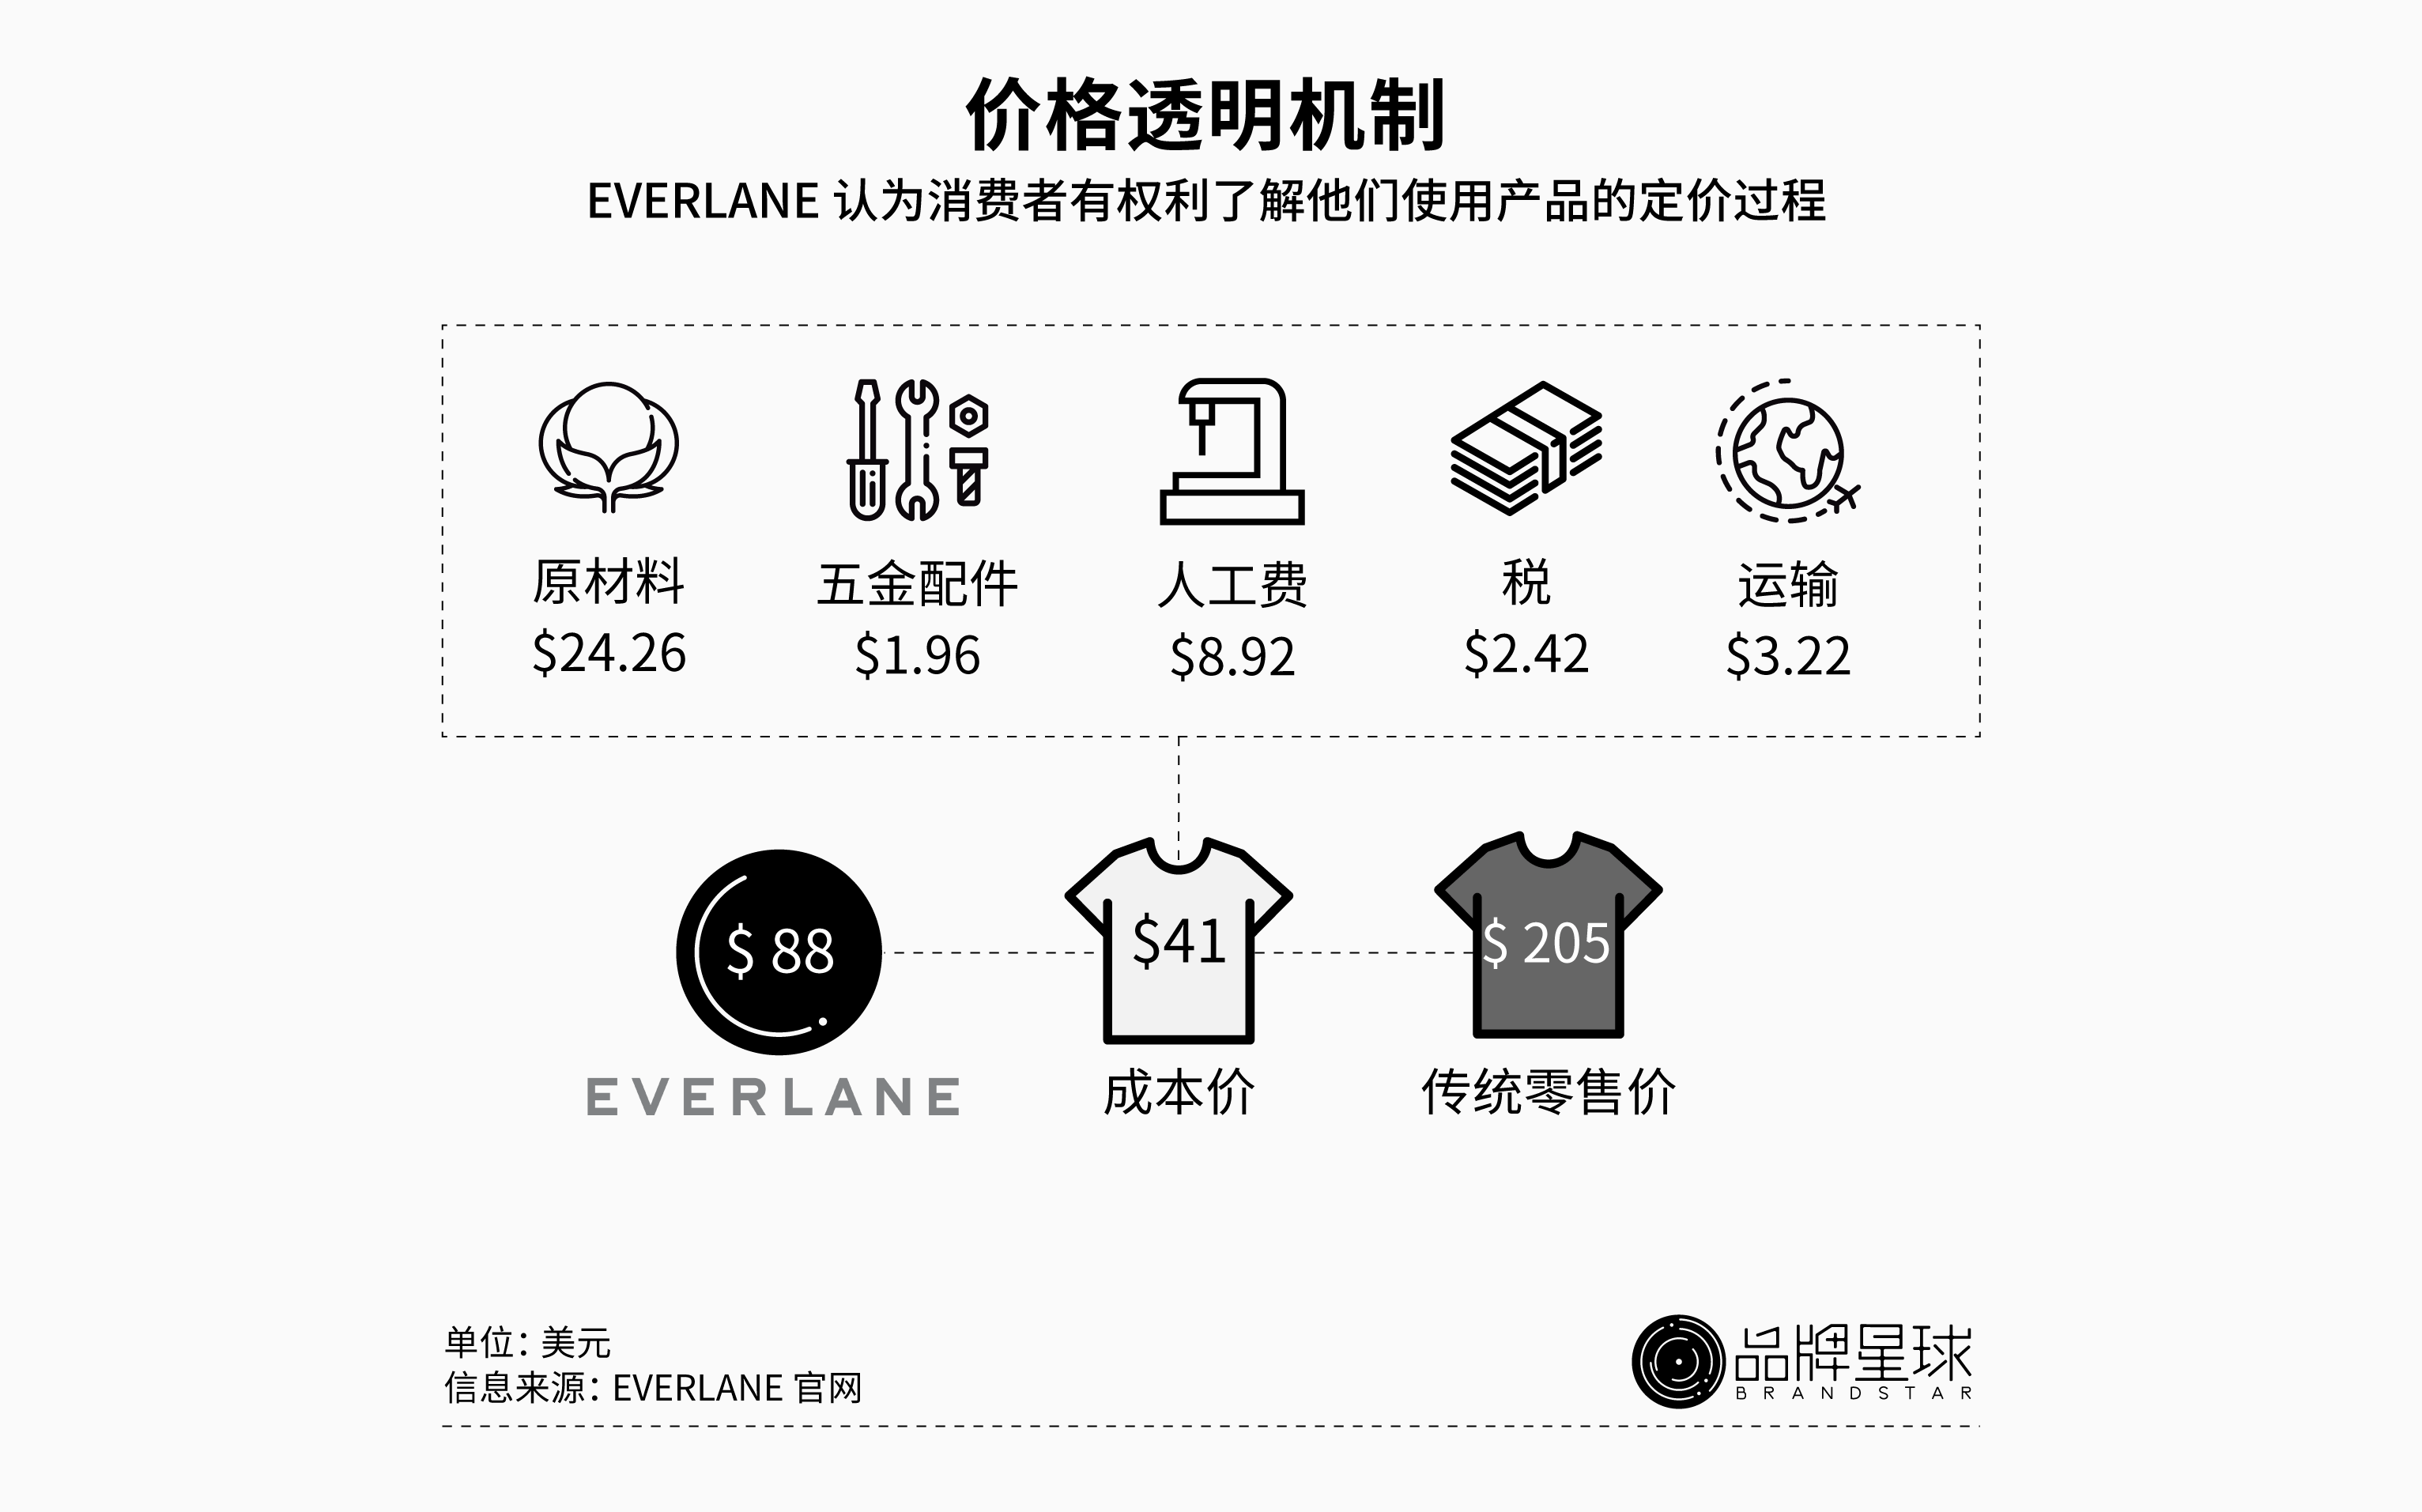 Everlane-定价透明